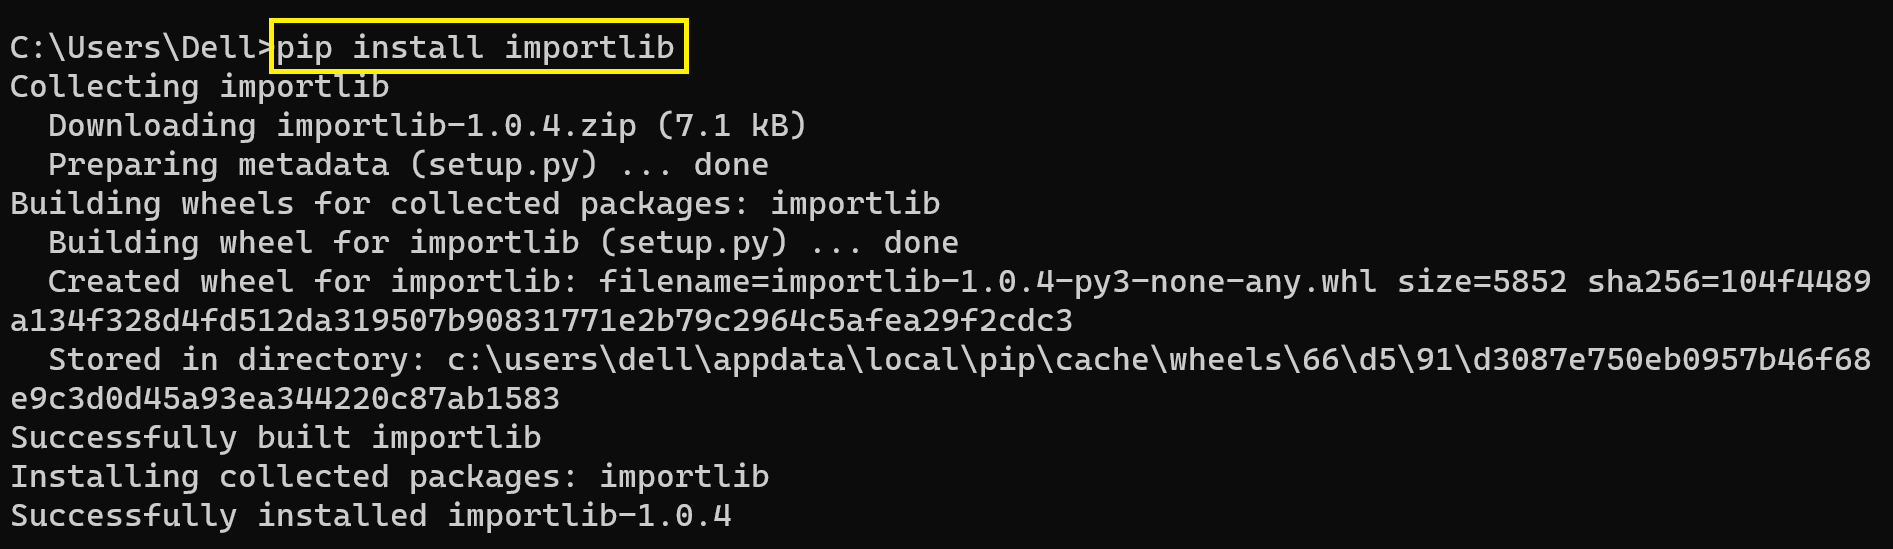 install importlib for attributeerror module 'importlib' has no attribute 'util'